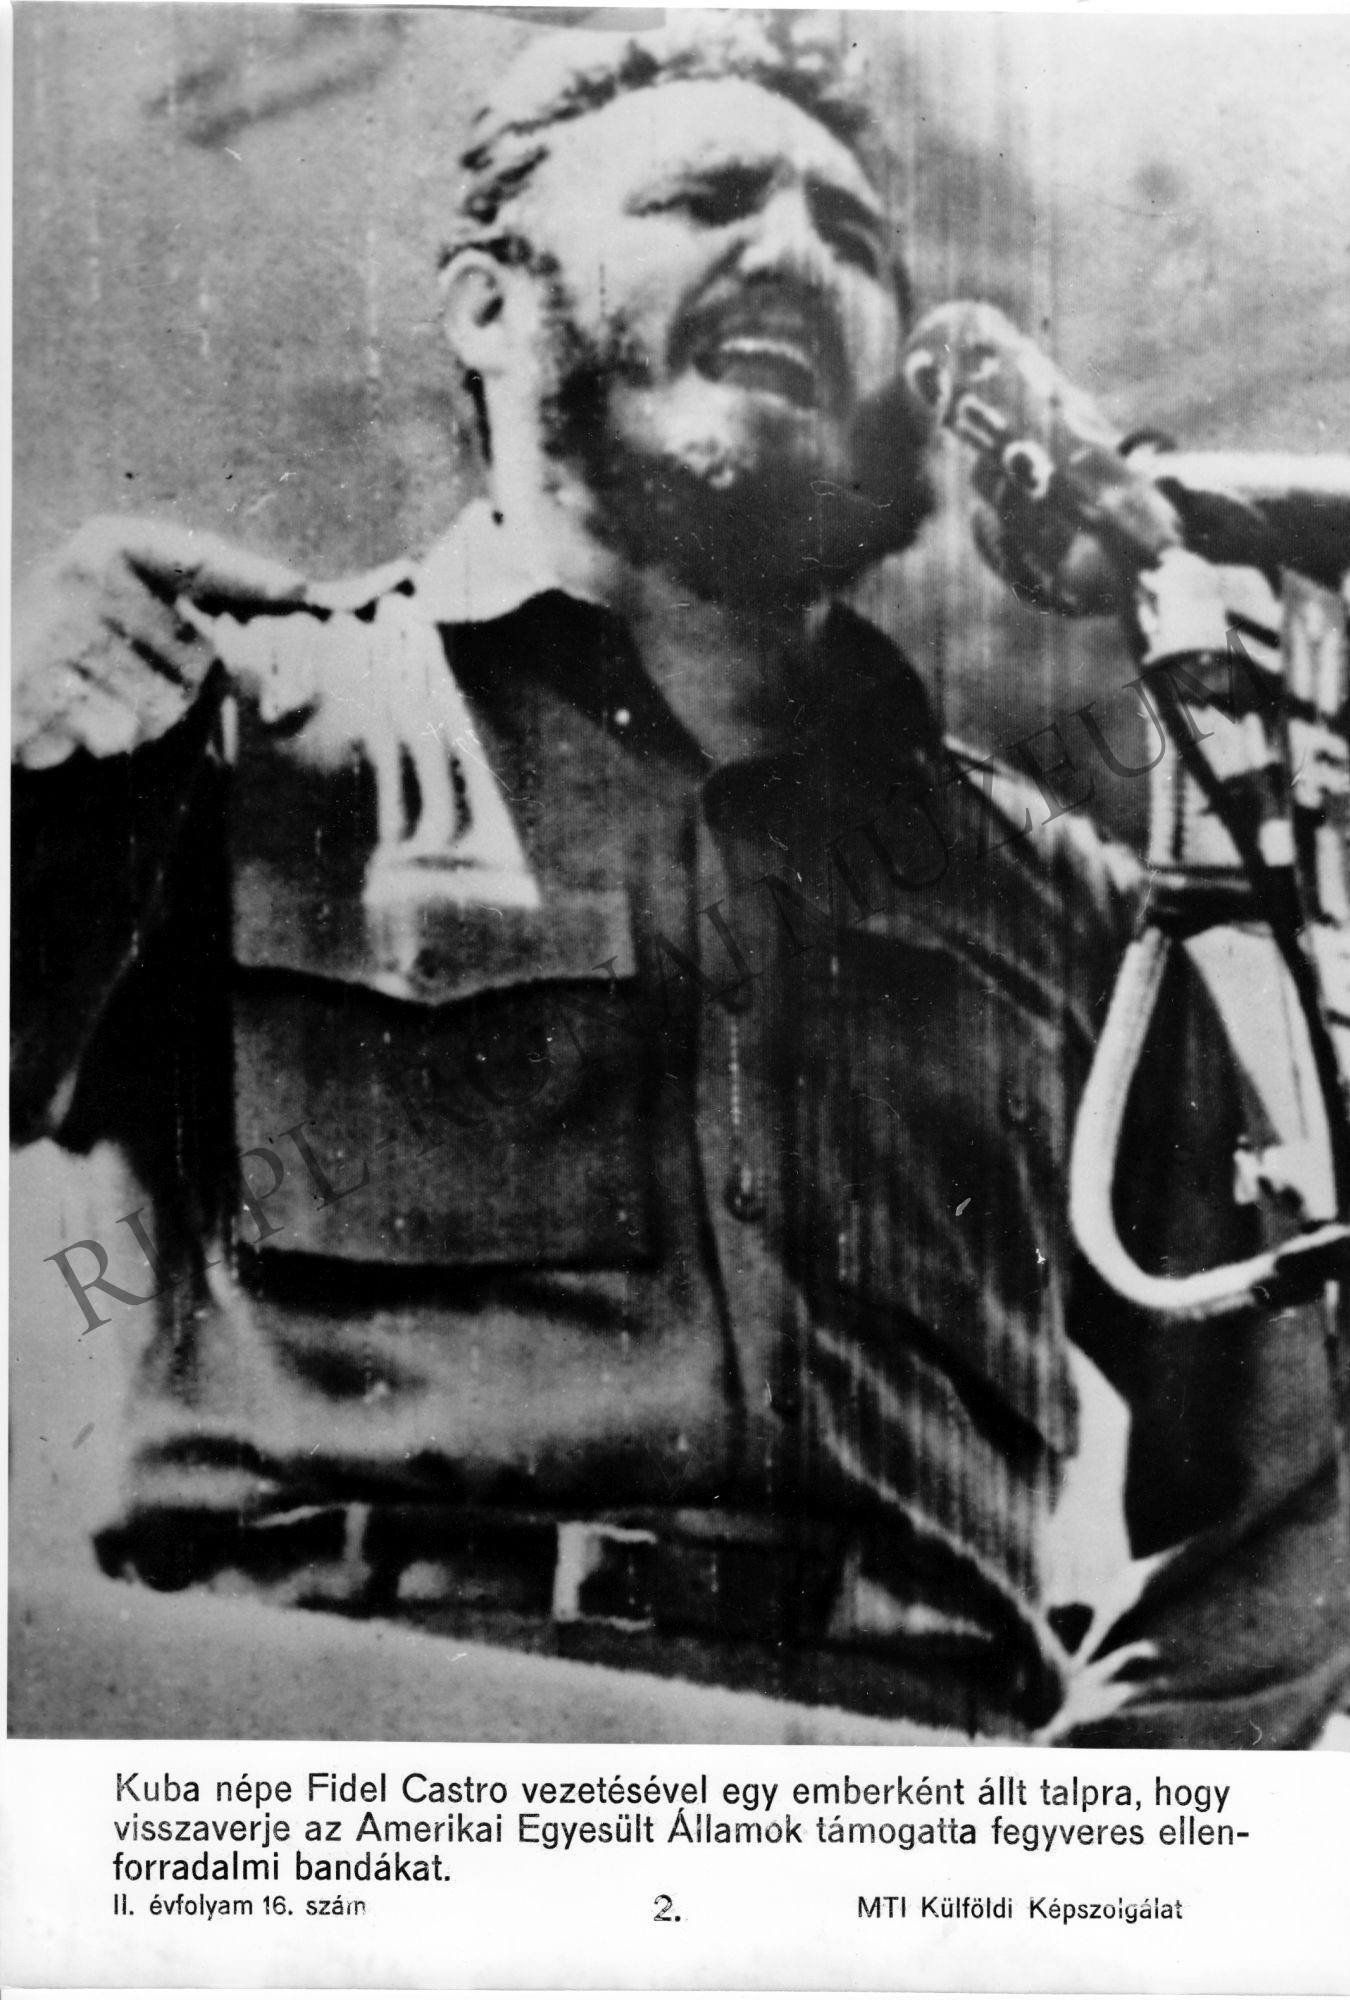 Fidel Castro beszédet mond. (Rippl-Rónai Múzeum CC BY-NC-SA)